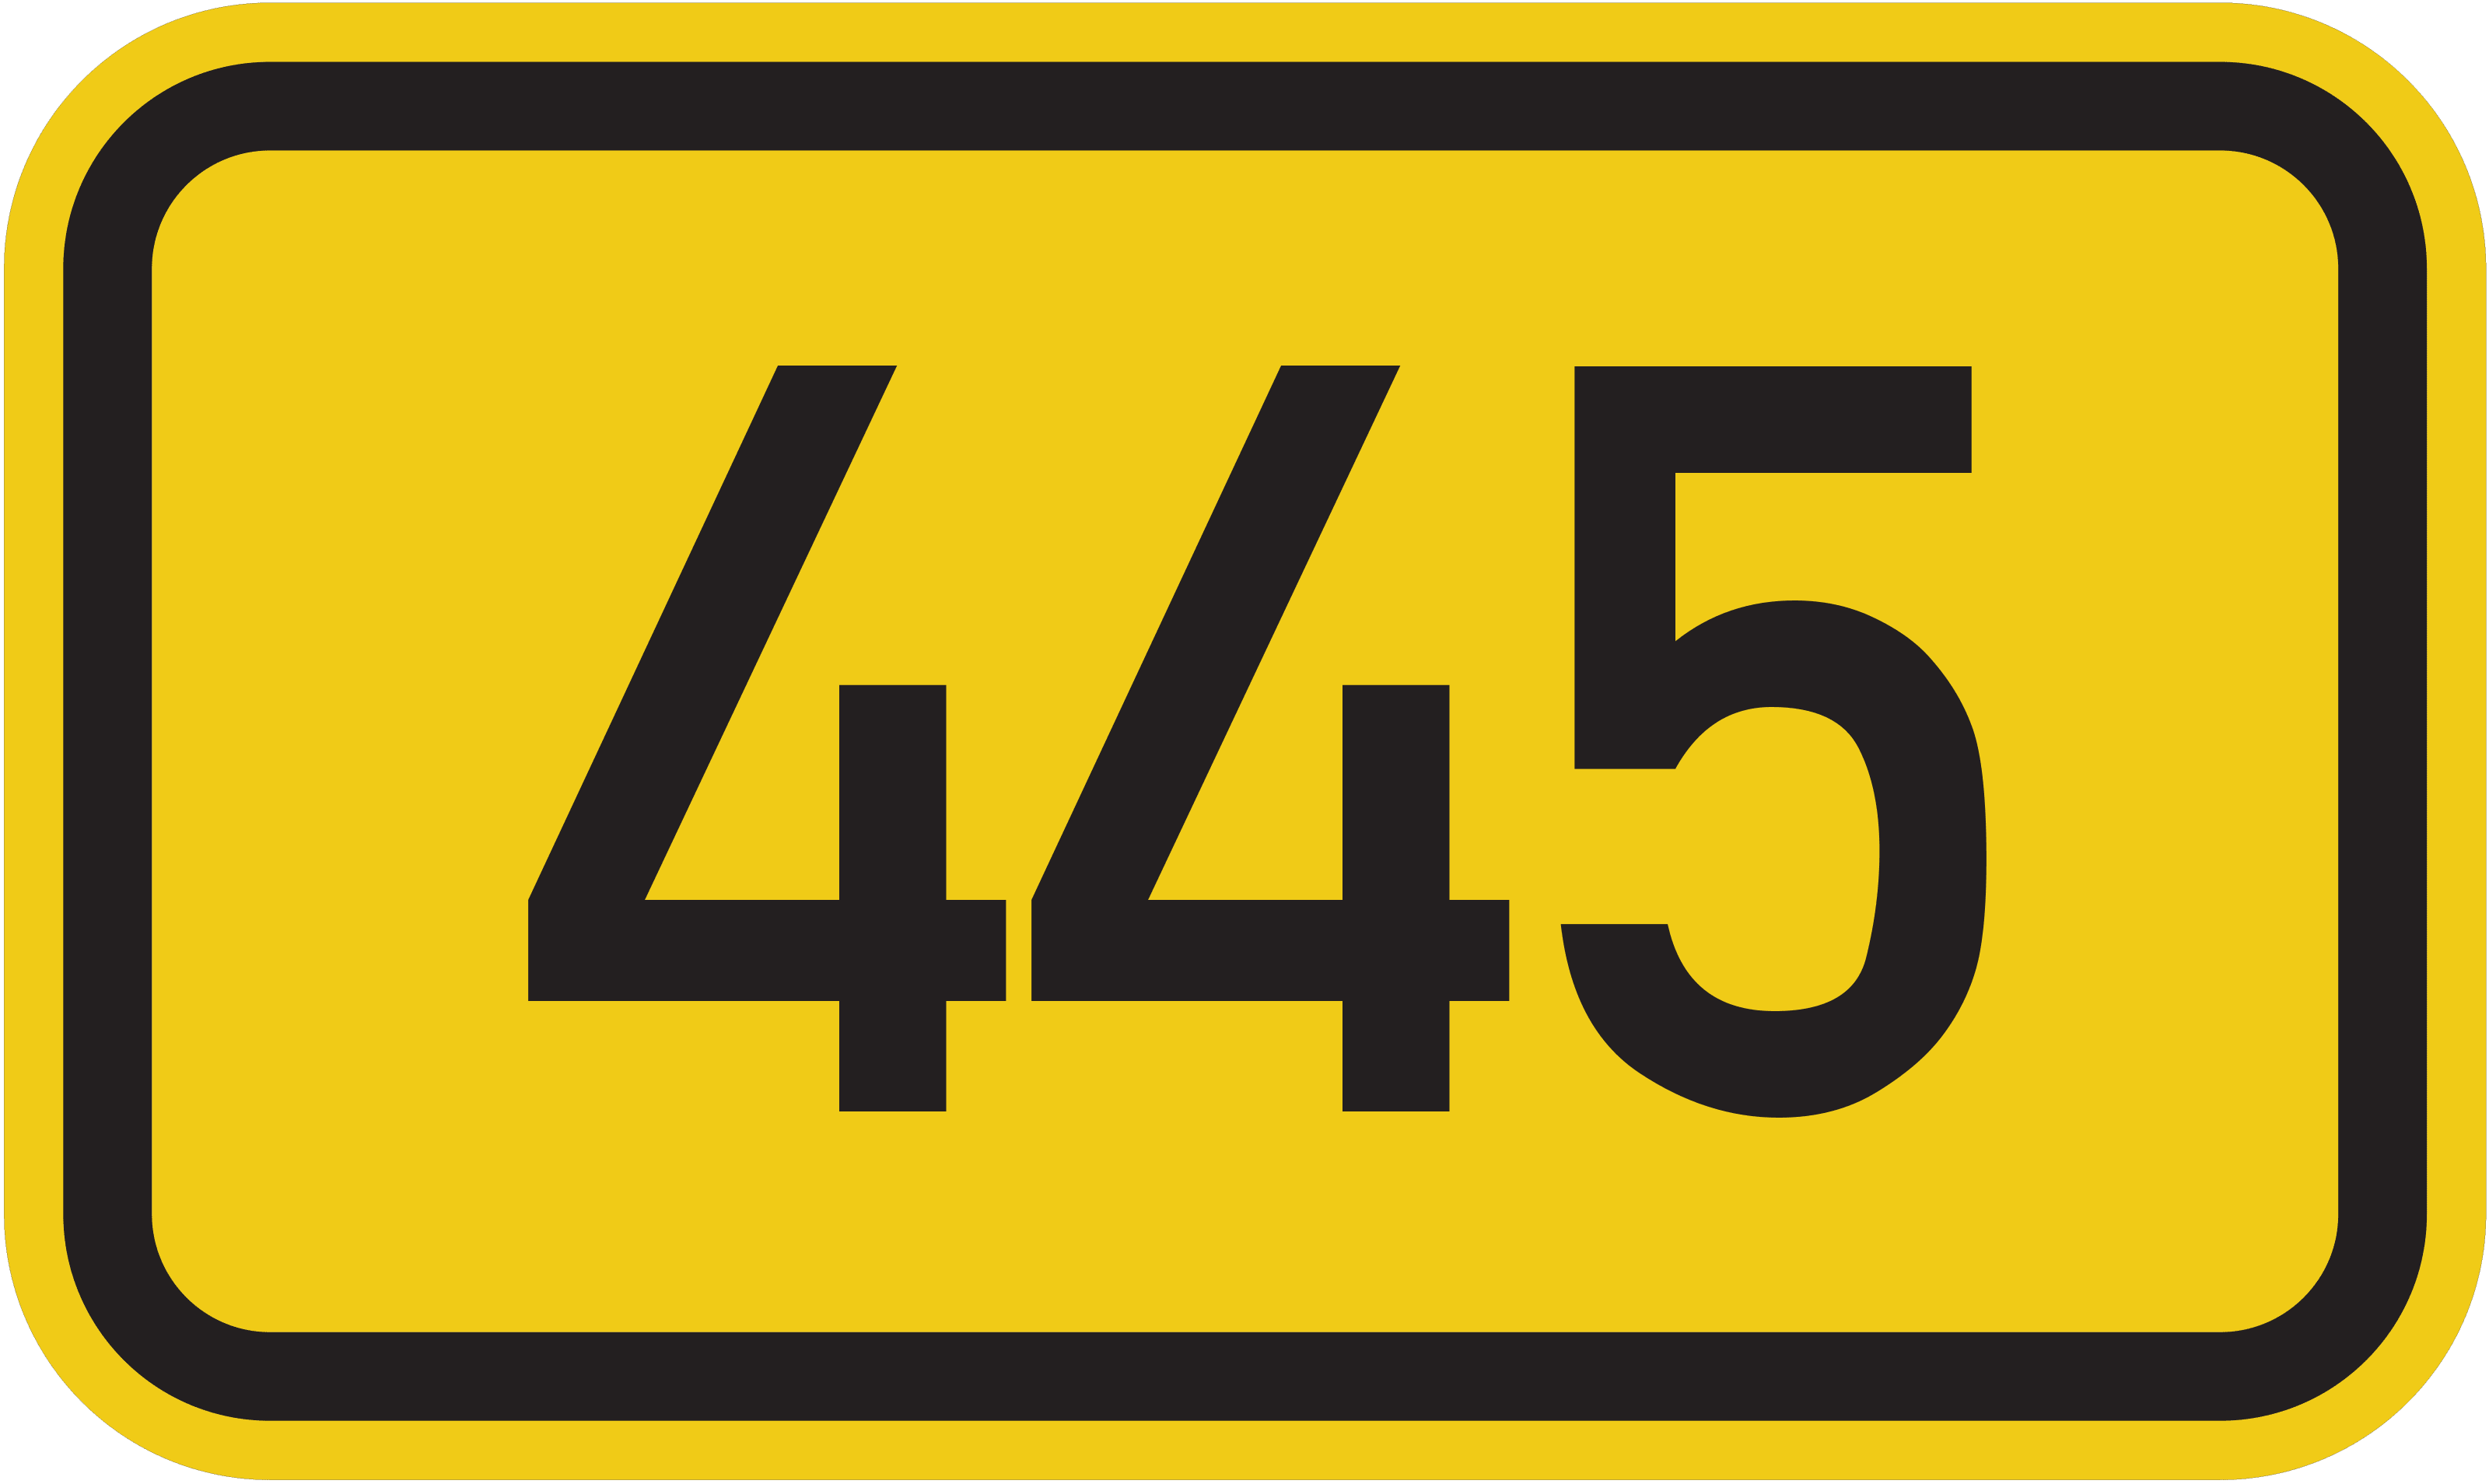 Straßenschild Bundesstraße 445